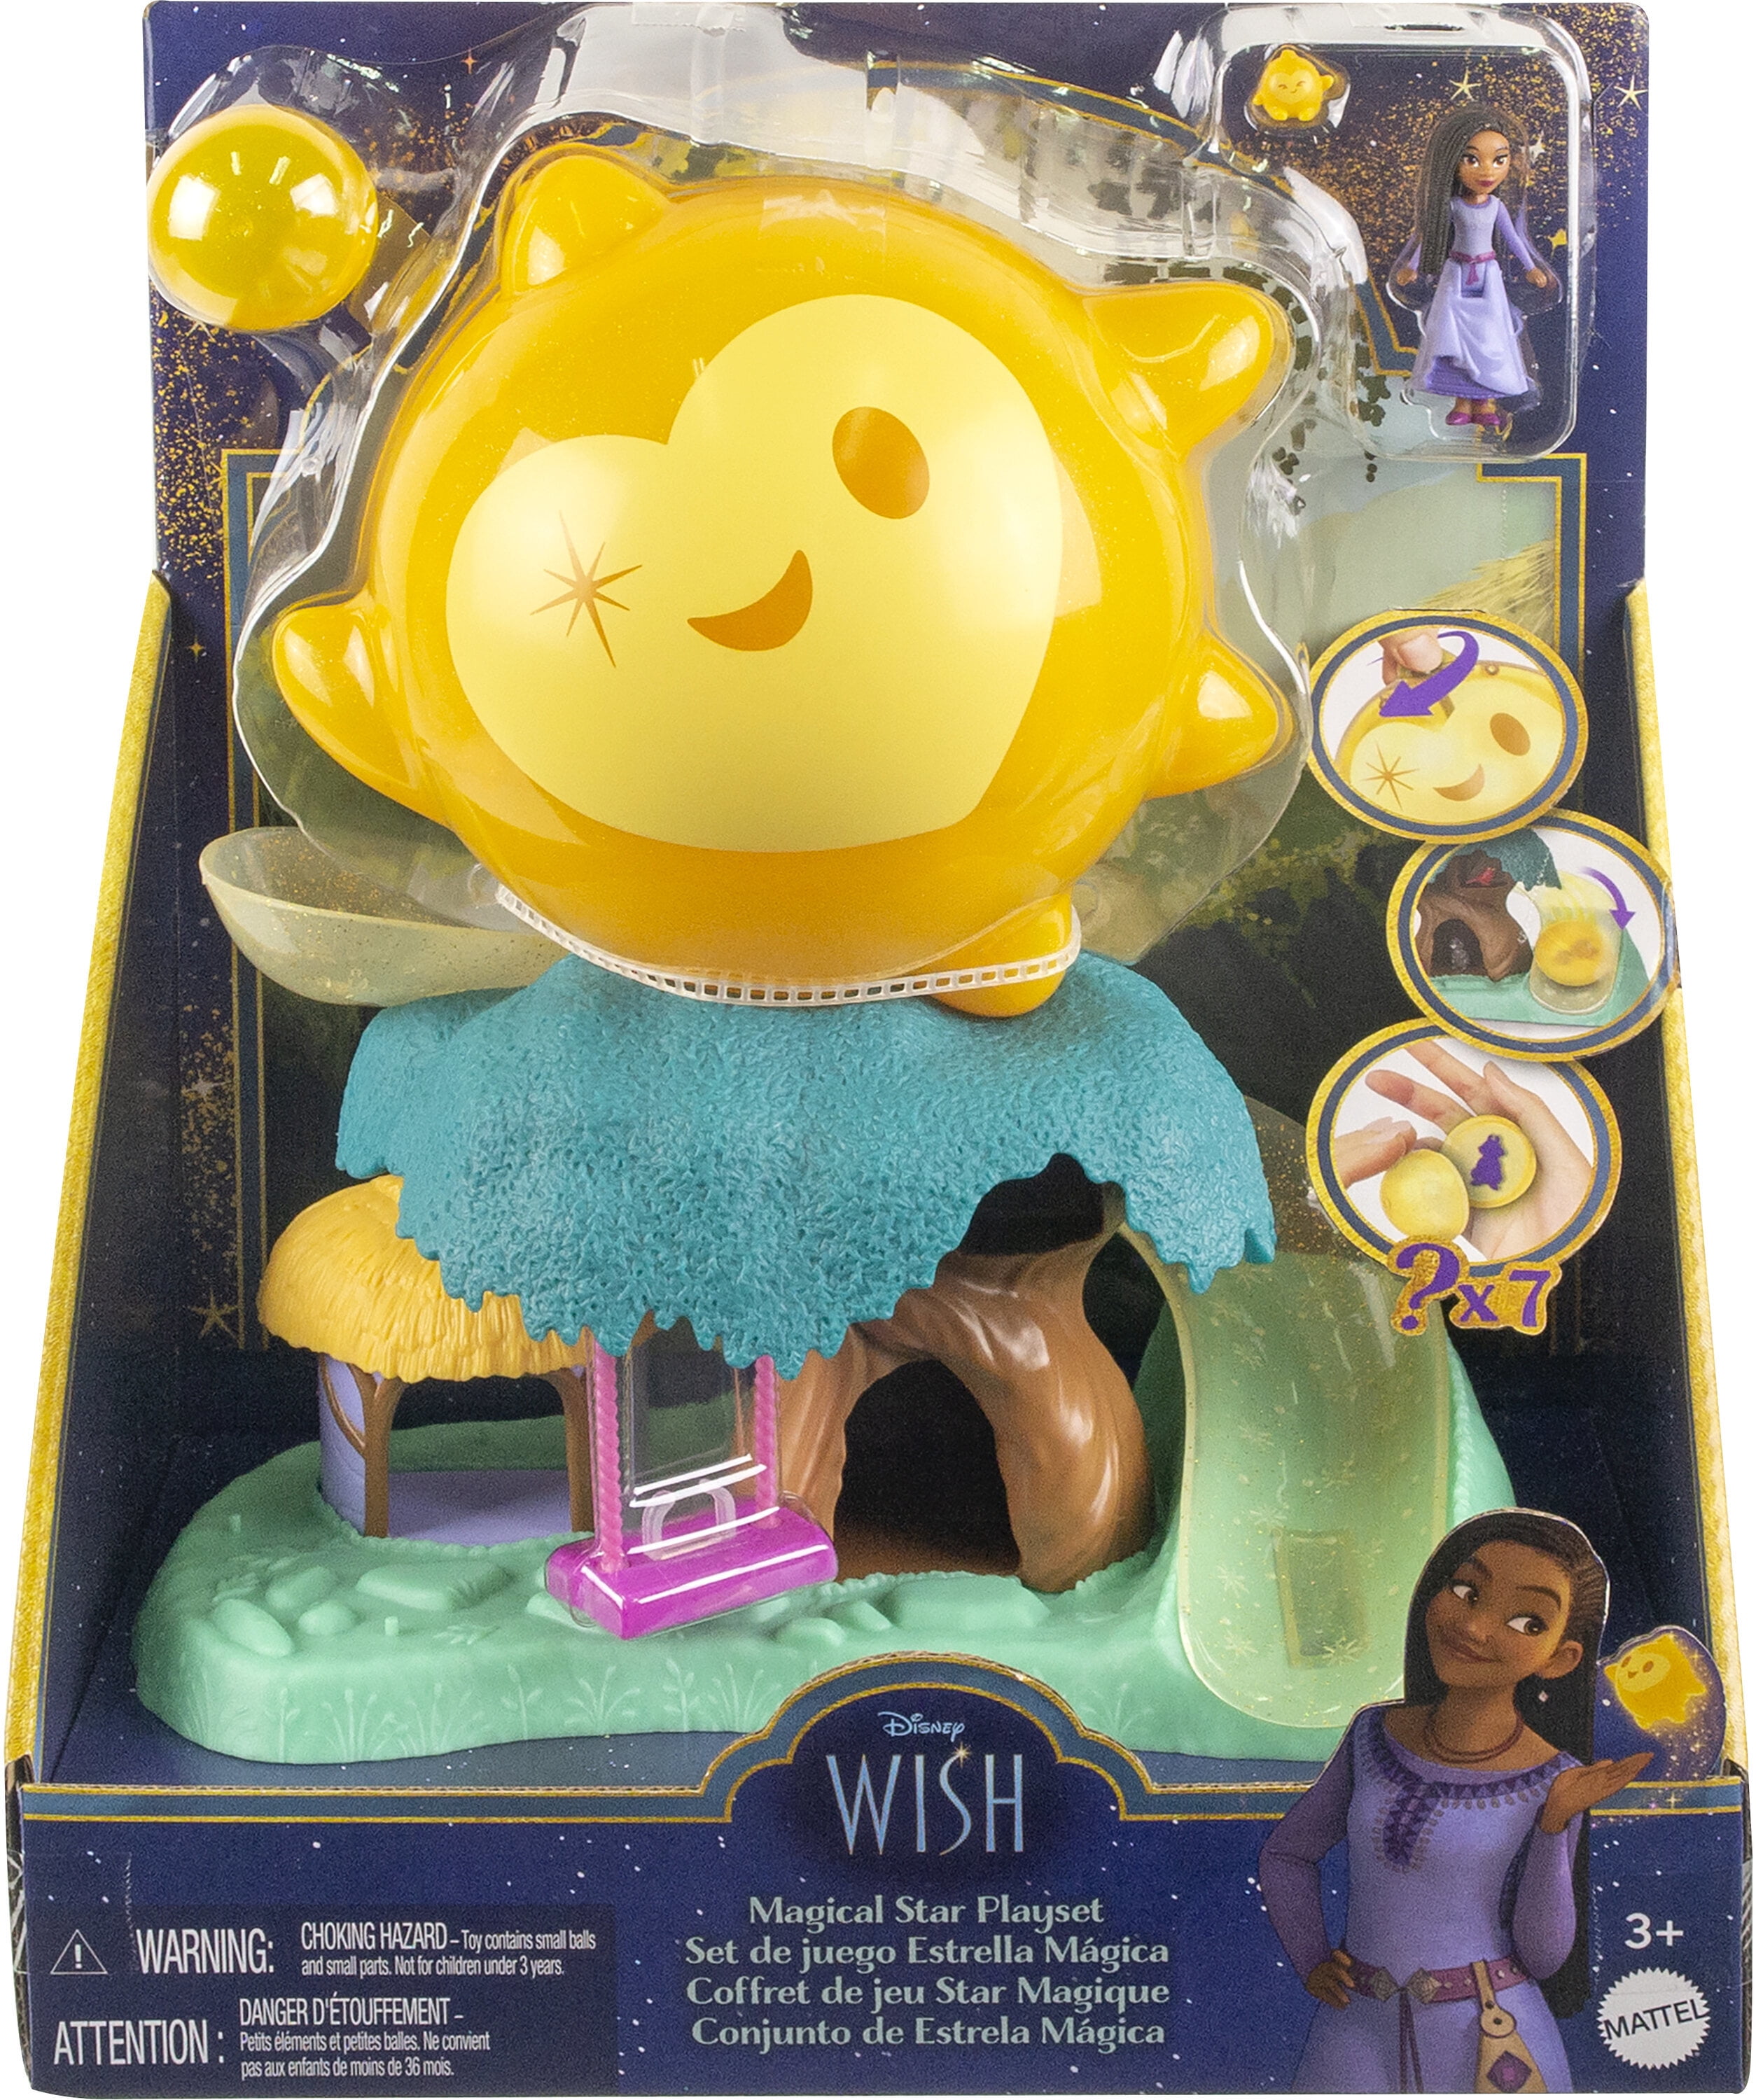 Wish' has lots of Disney star power